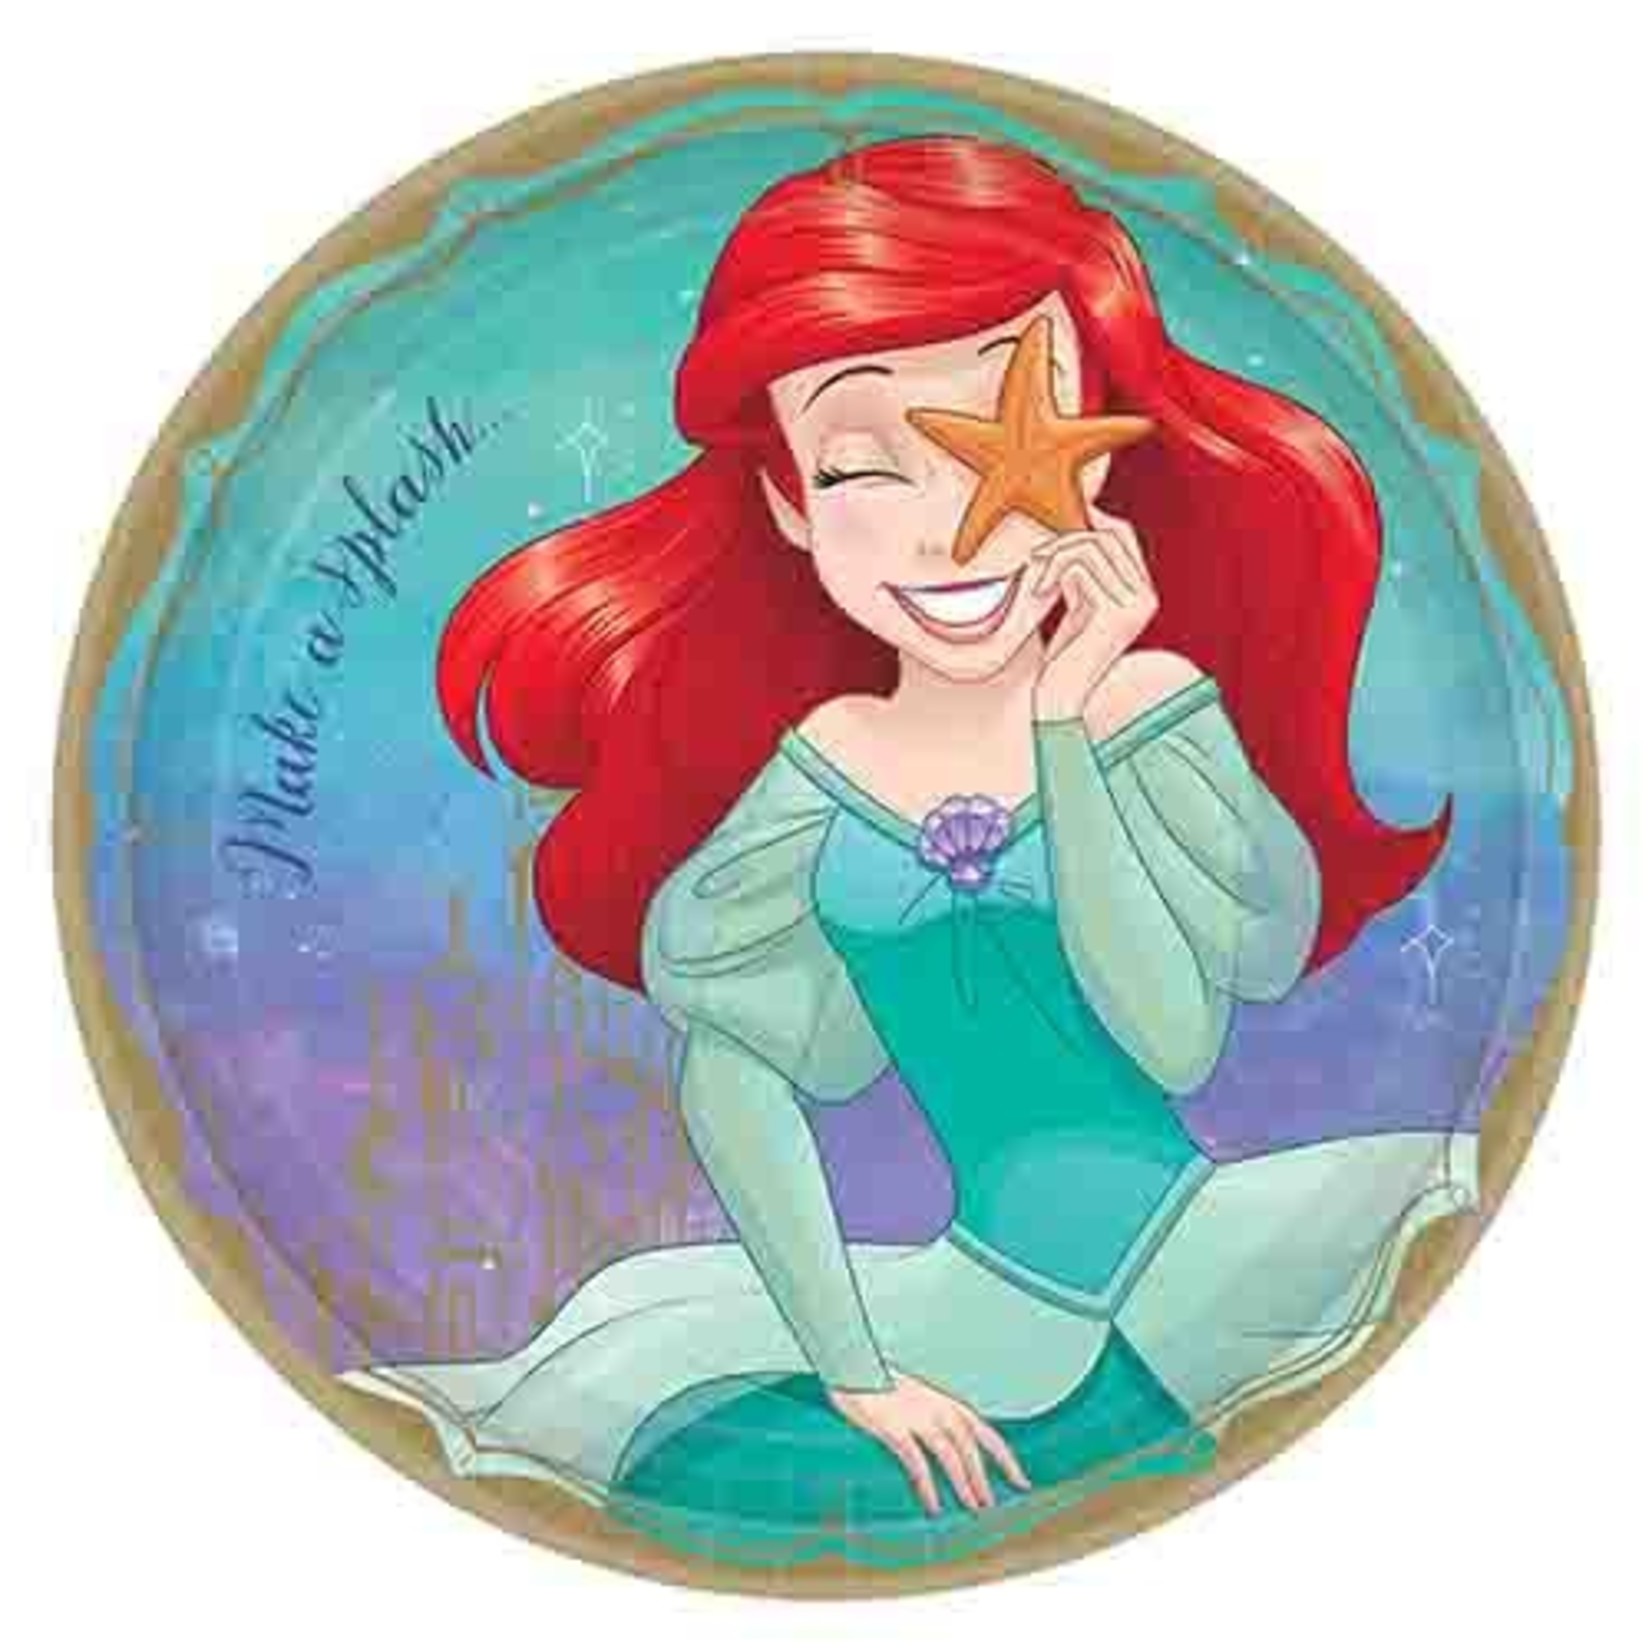 Amscan 9" Disney's Princess Ariel Plates - 8ct.